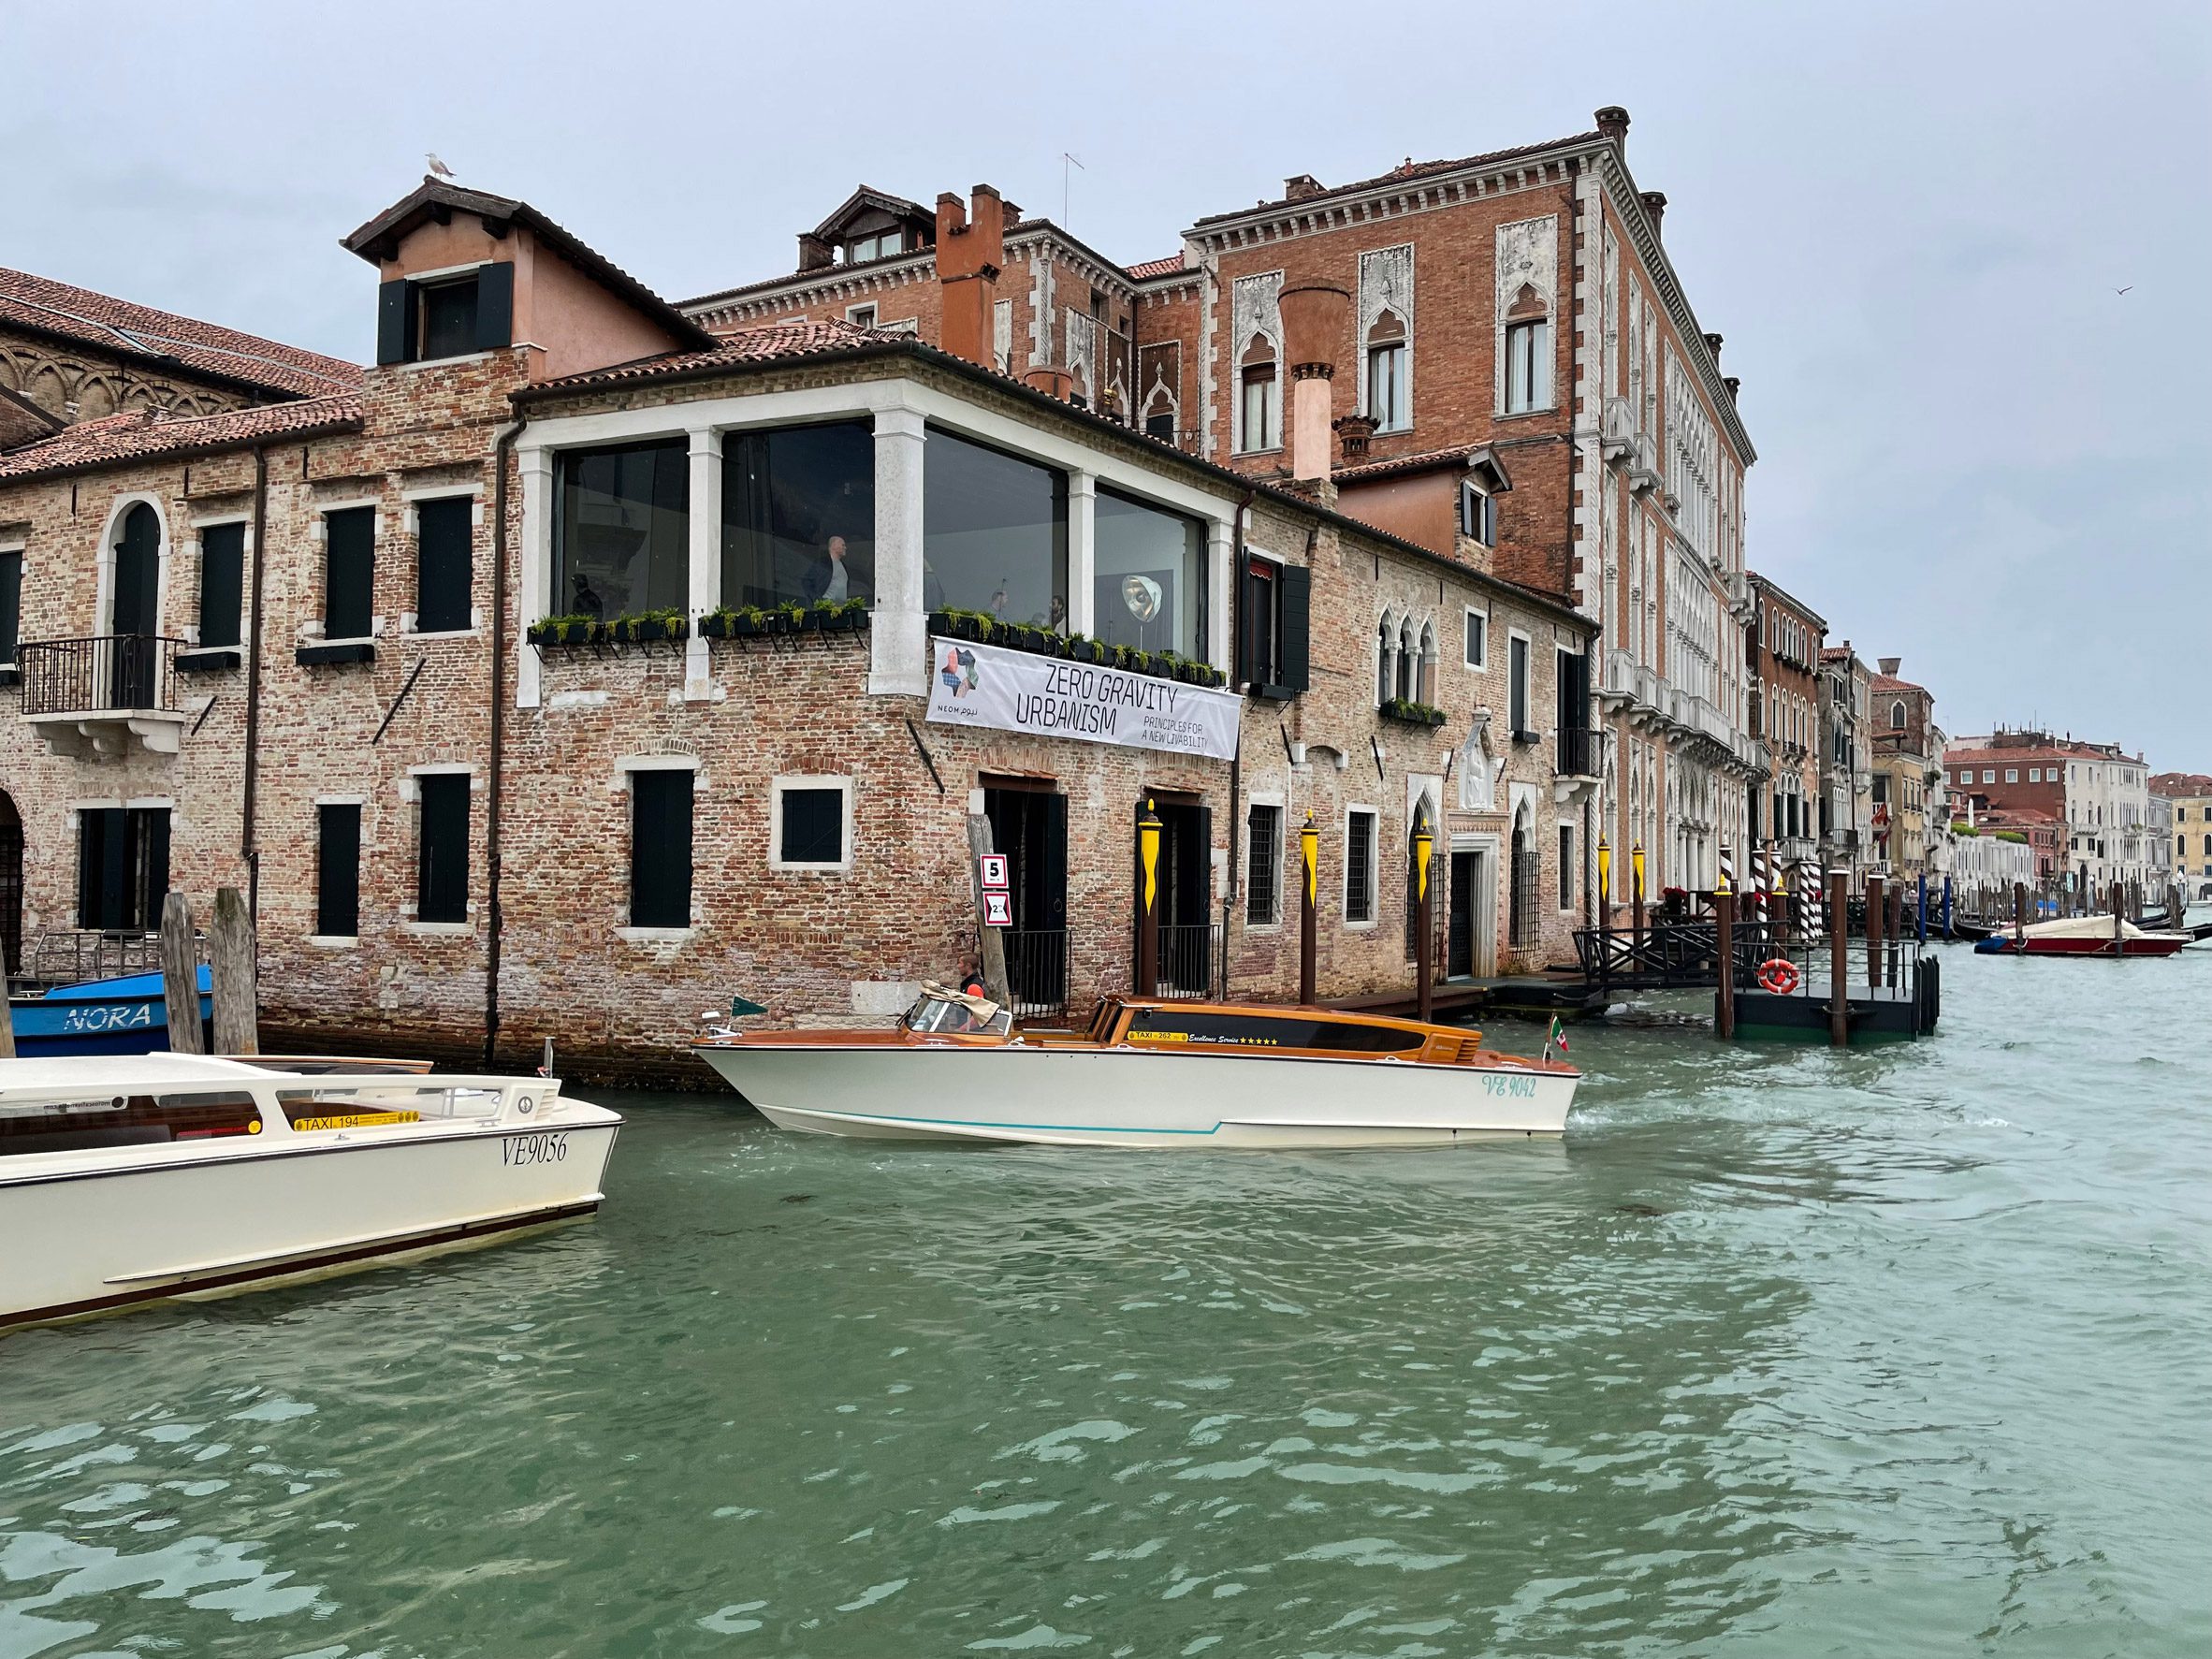 Zero Gravity Urbanism at the Venice Architecture Biennale.